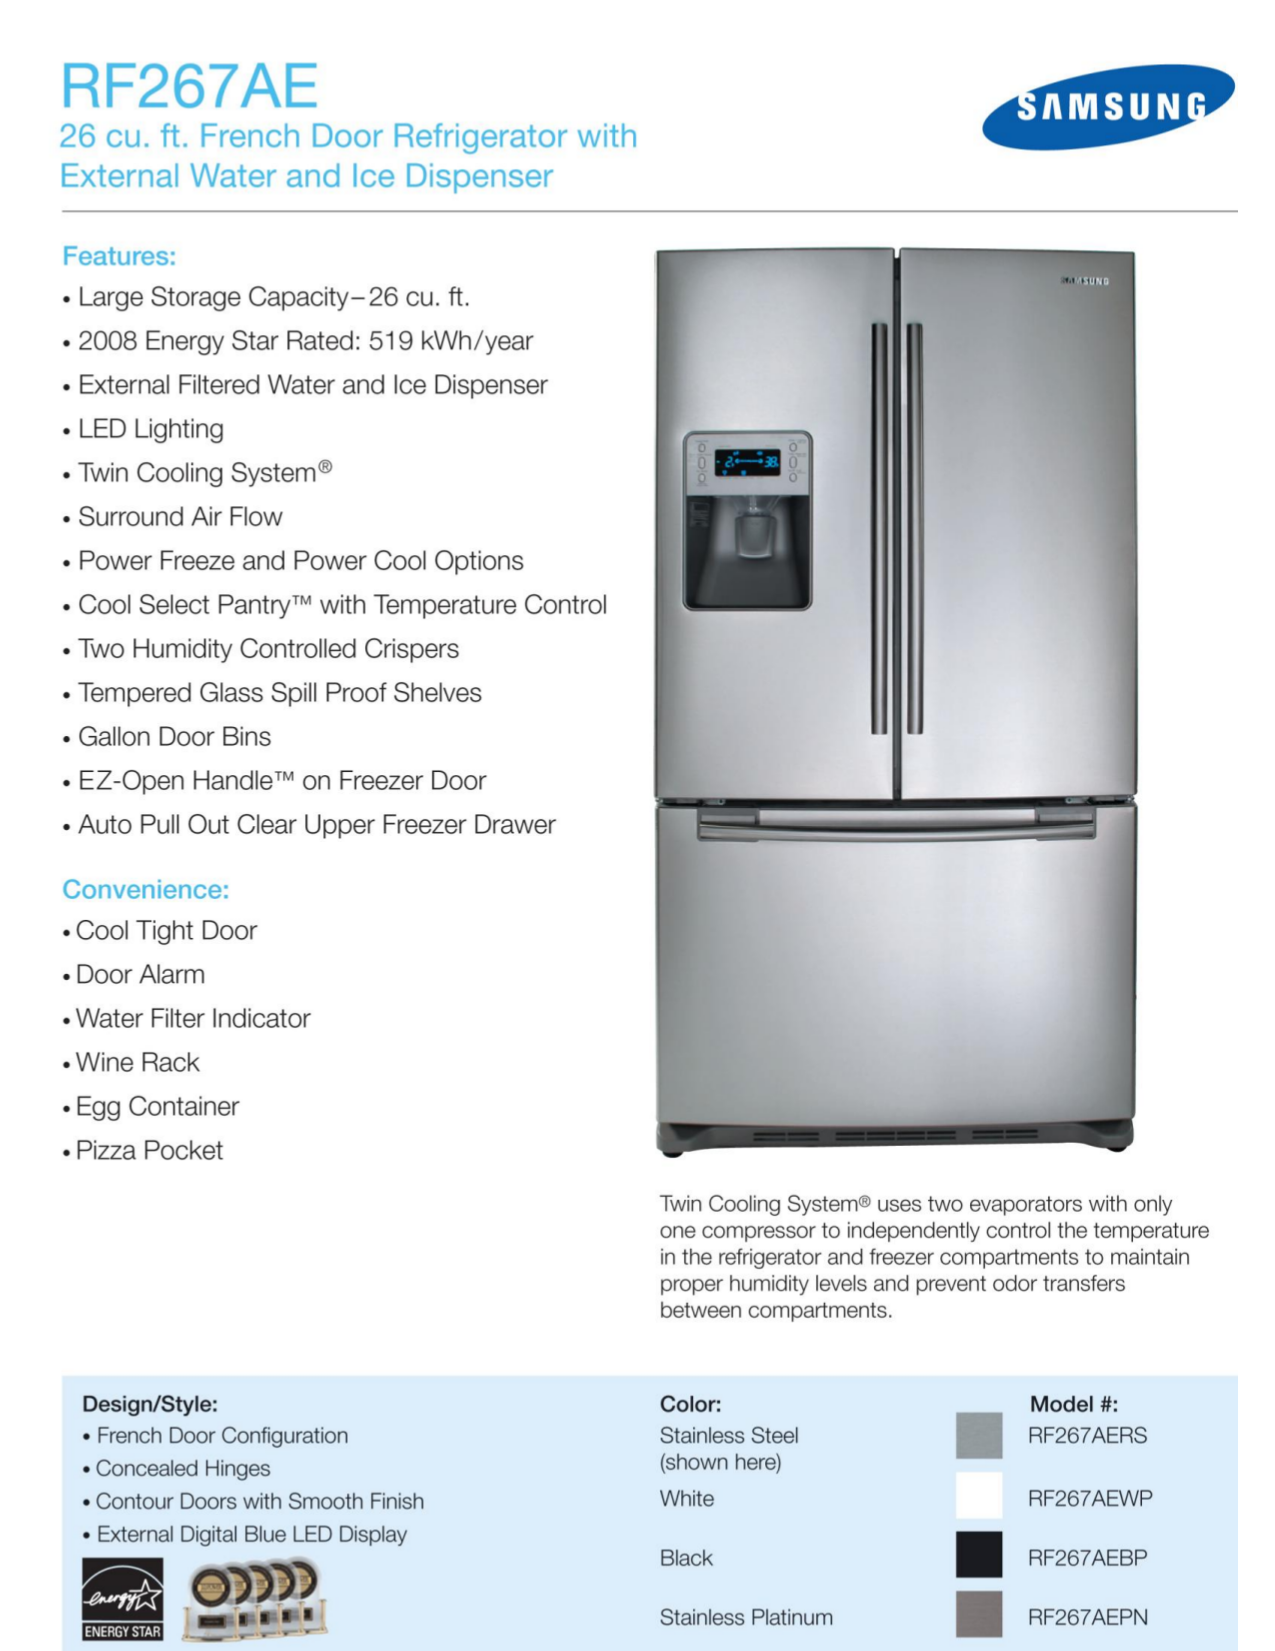 User Manual For Samsung Refrigerator